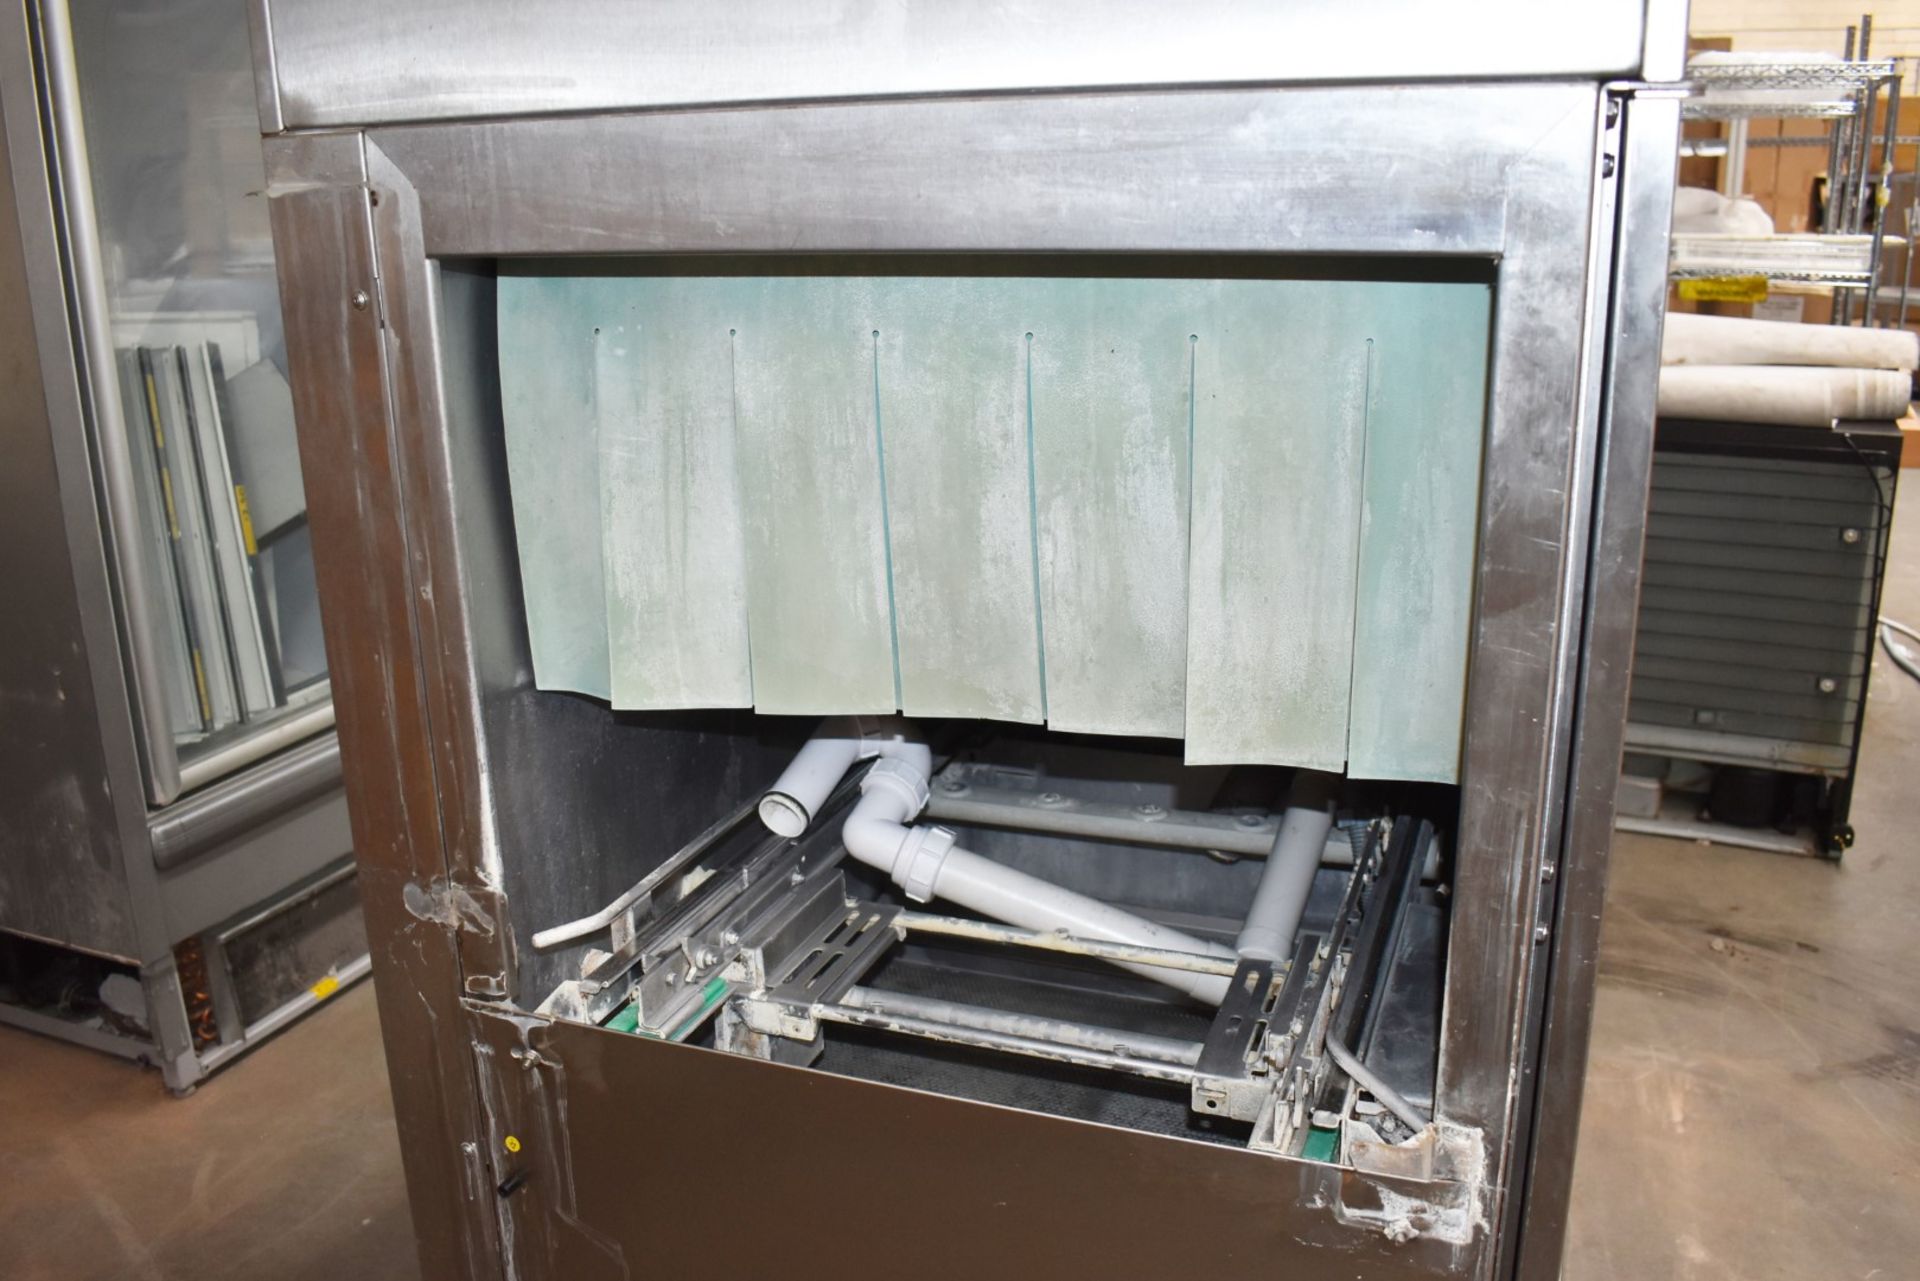 1 x Winterhalter MTR Multi Tank Rack Conveyor Passthrough Dishwasher - Original RRP Approx £16,000 - - Image 14 of 17